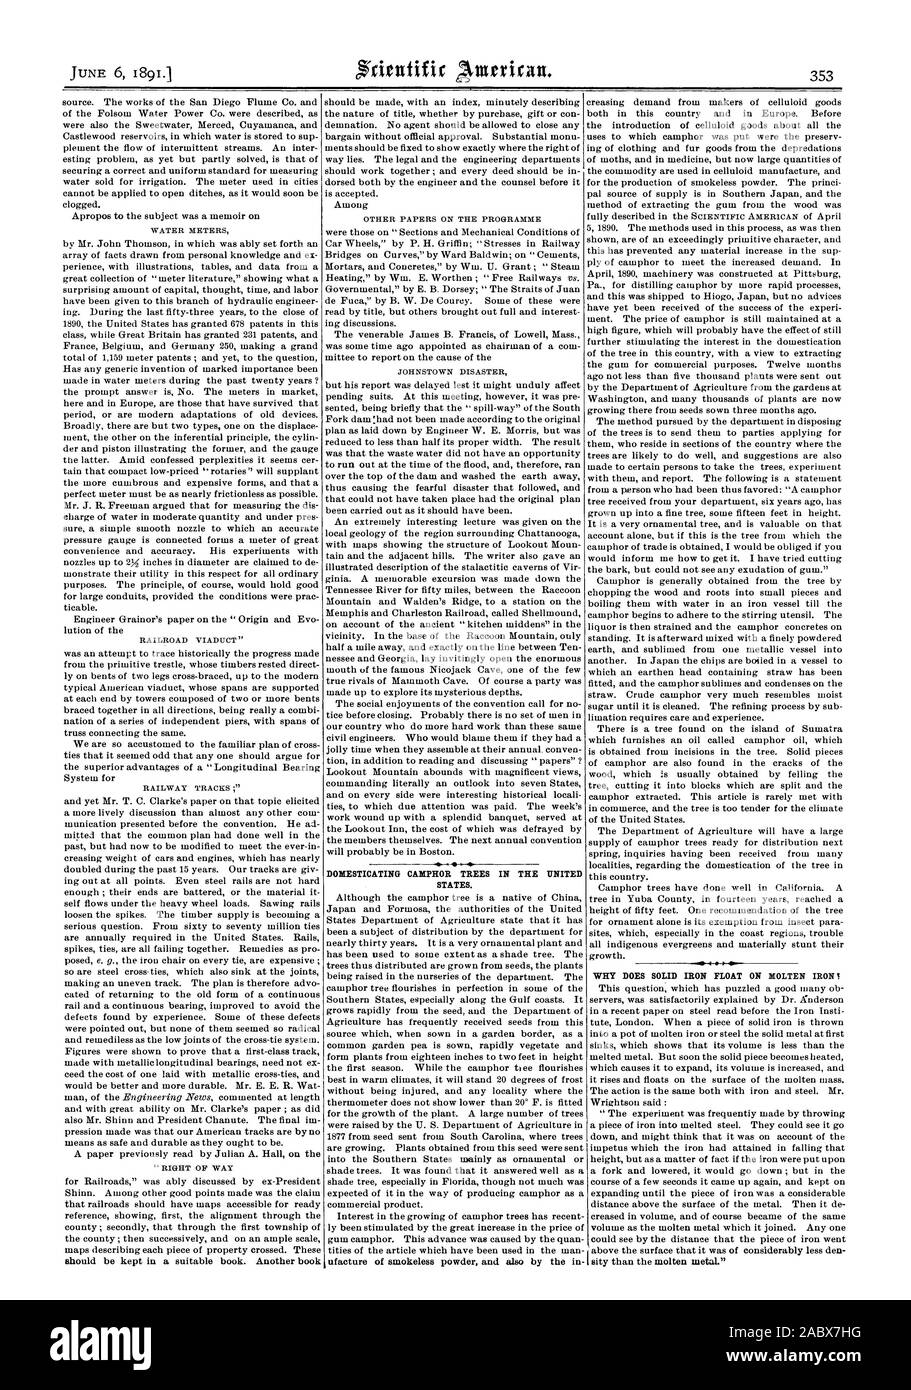 Domestikation KAMPFER BÄUME IN DEN VEREINIGTEN STAATEN., Scientific American, 1891-06-06 Stockfoto